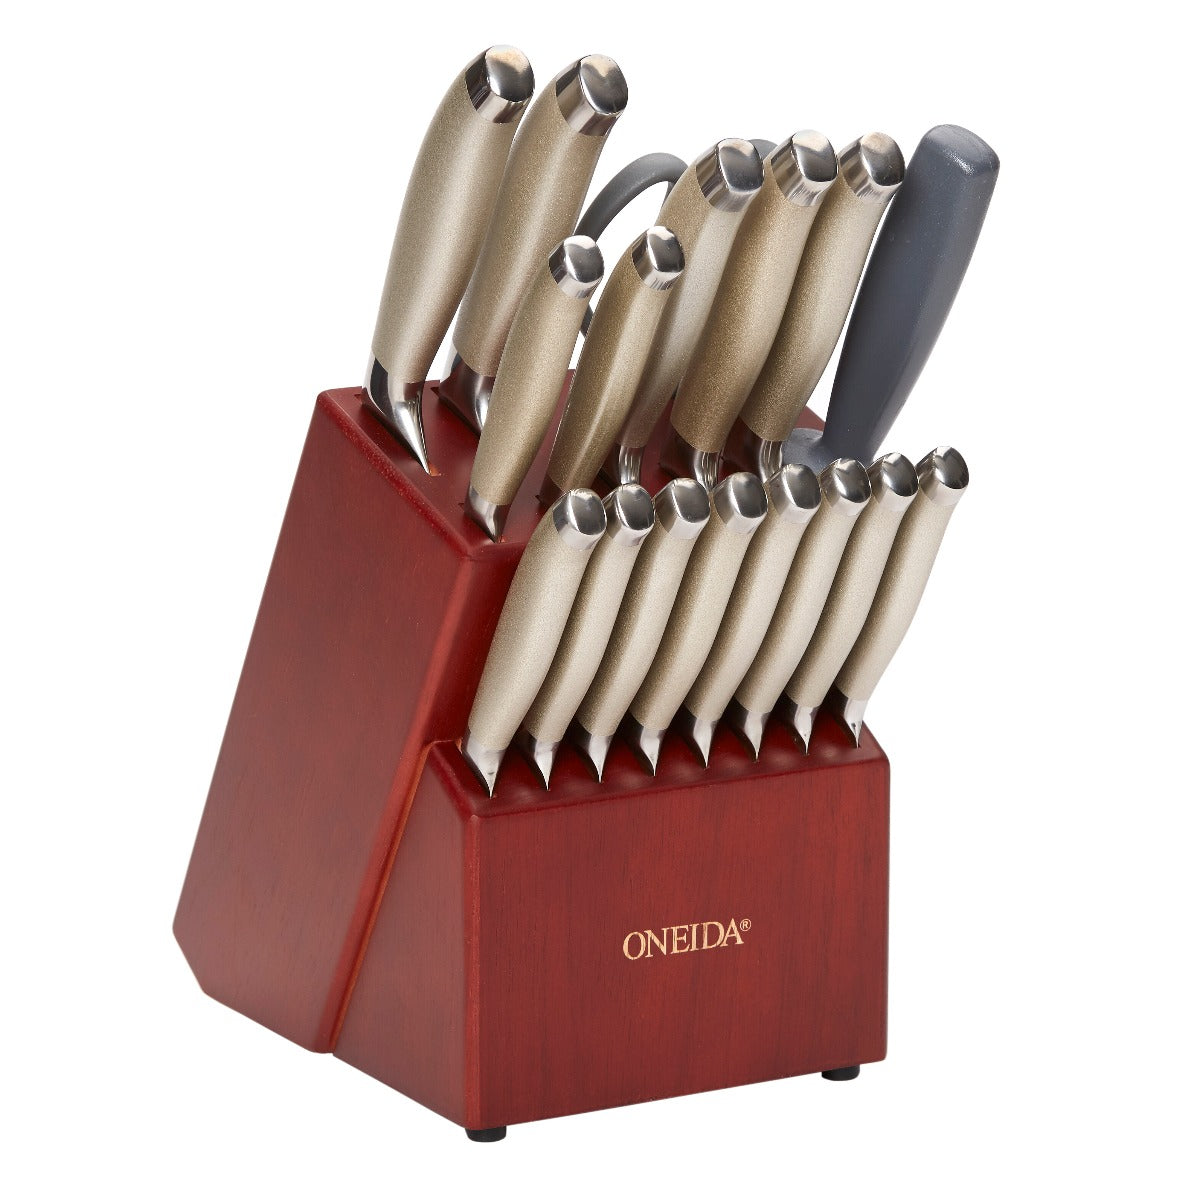 Oneida Preferred 18 Piece Stainless Steel Knife Block Cutlery Set & Reviews